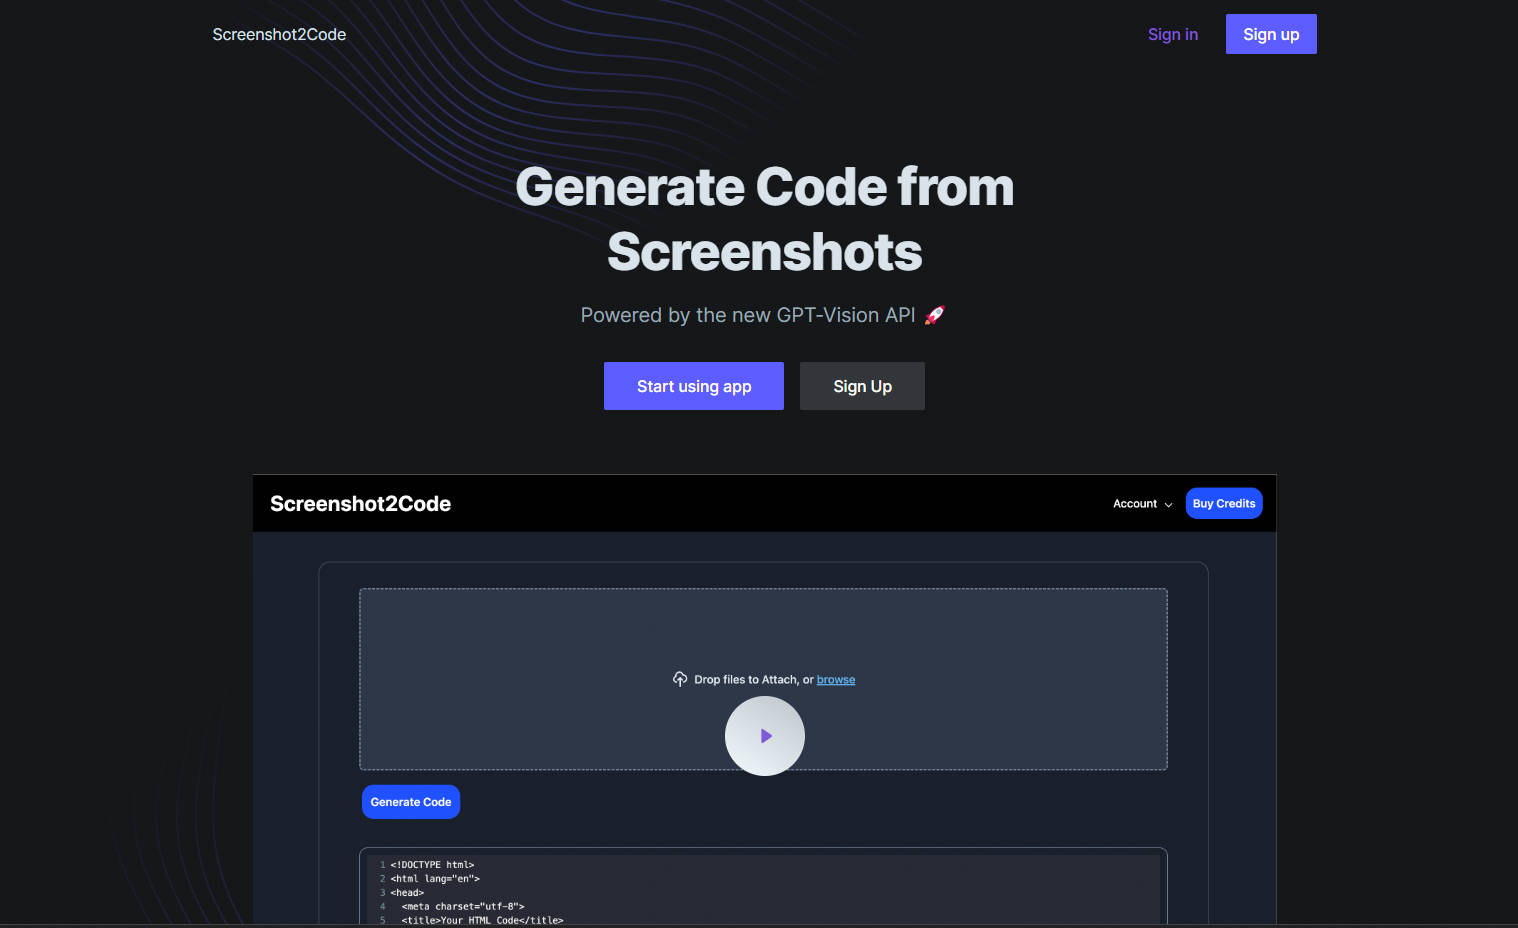 Screenshot2Code